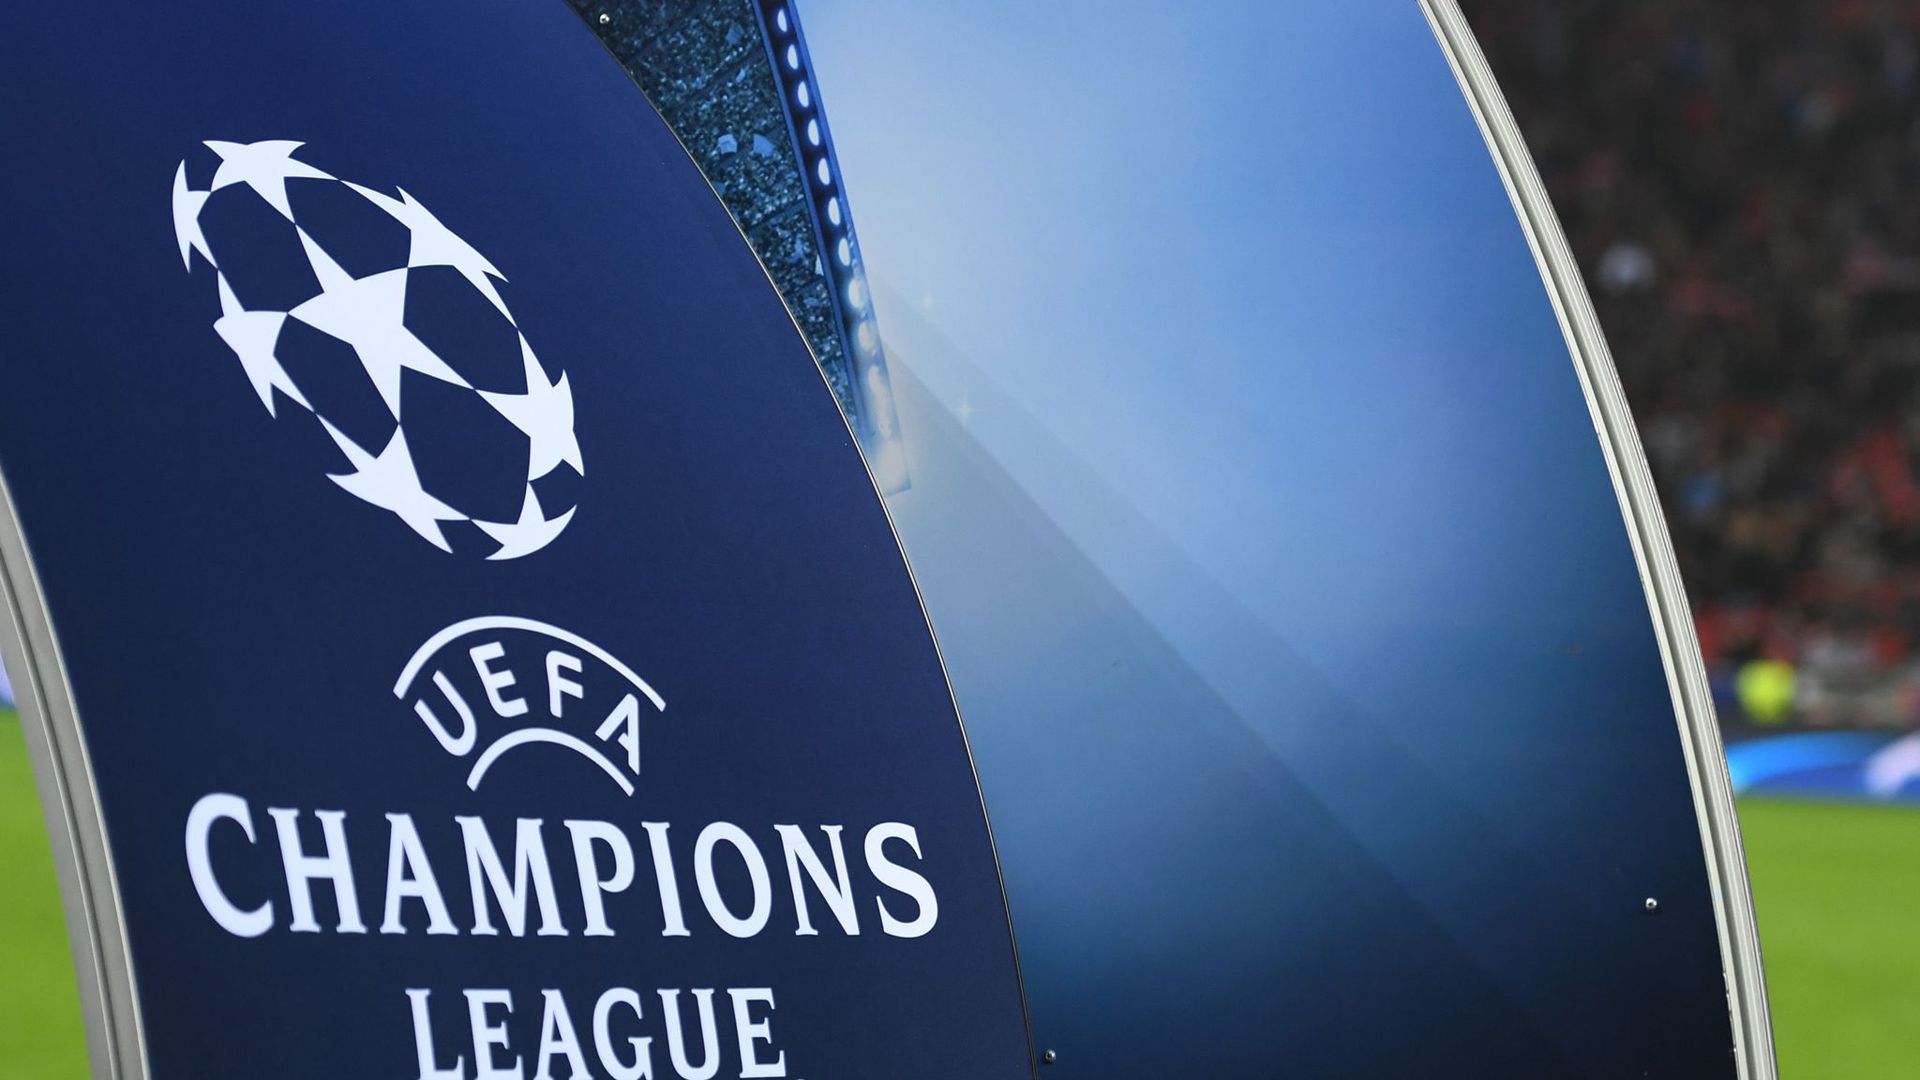 Iin der Champions League soll im August der Ball wieder rollen.